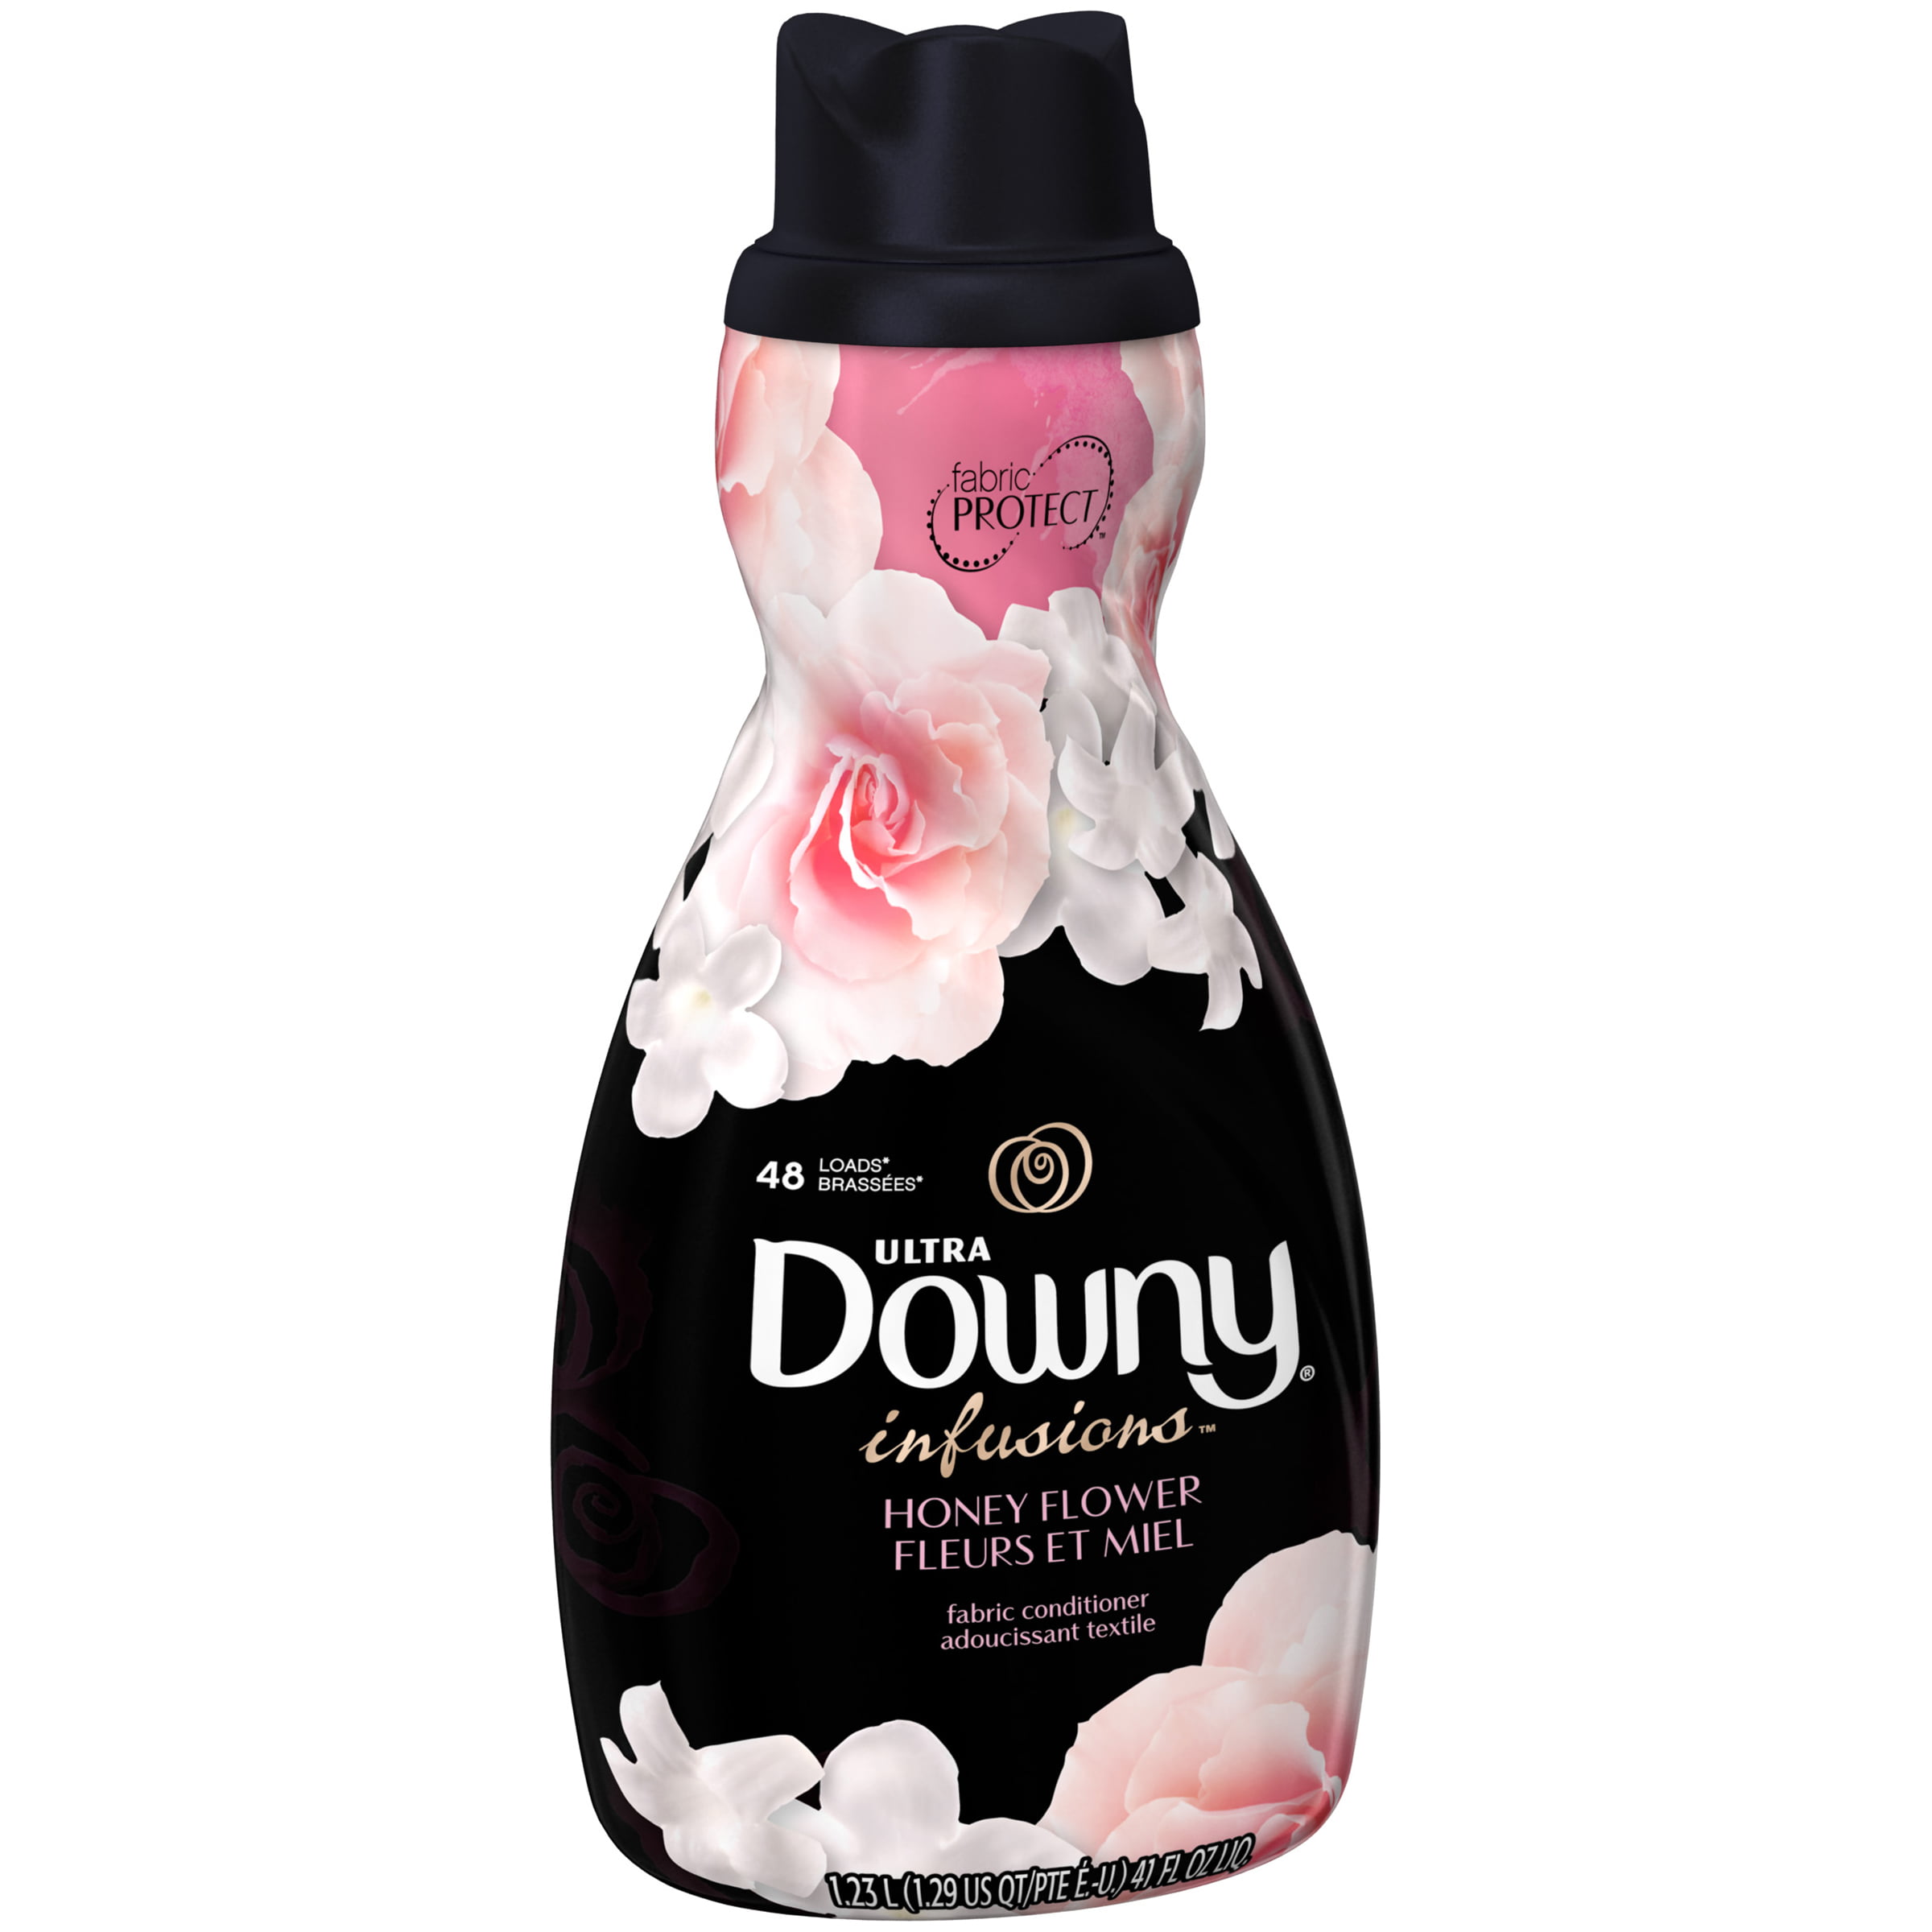 downy-infusions-honey-flower-liquid-fabric-conditioner-fabric-softener